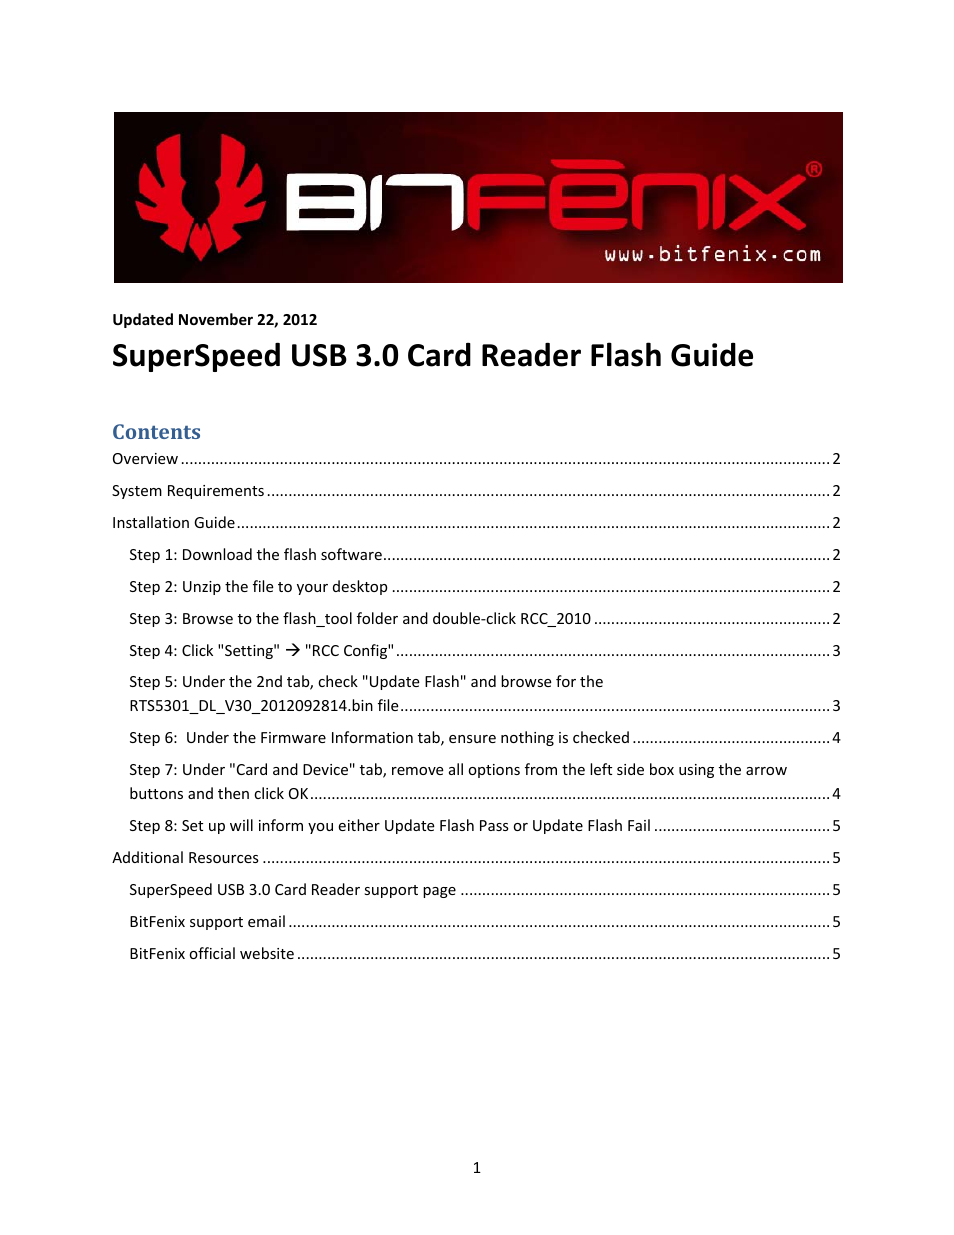 SuperSpeed USB 3.0 Card Reader